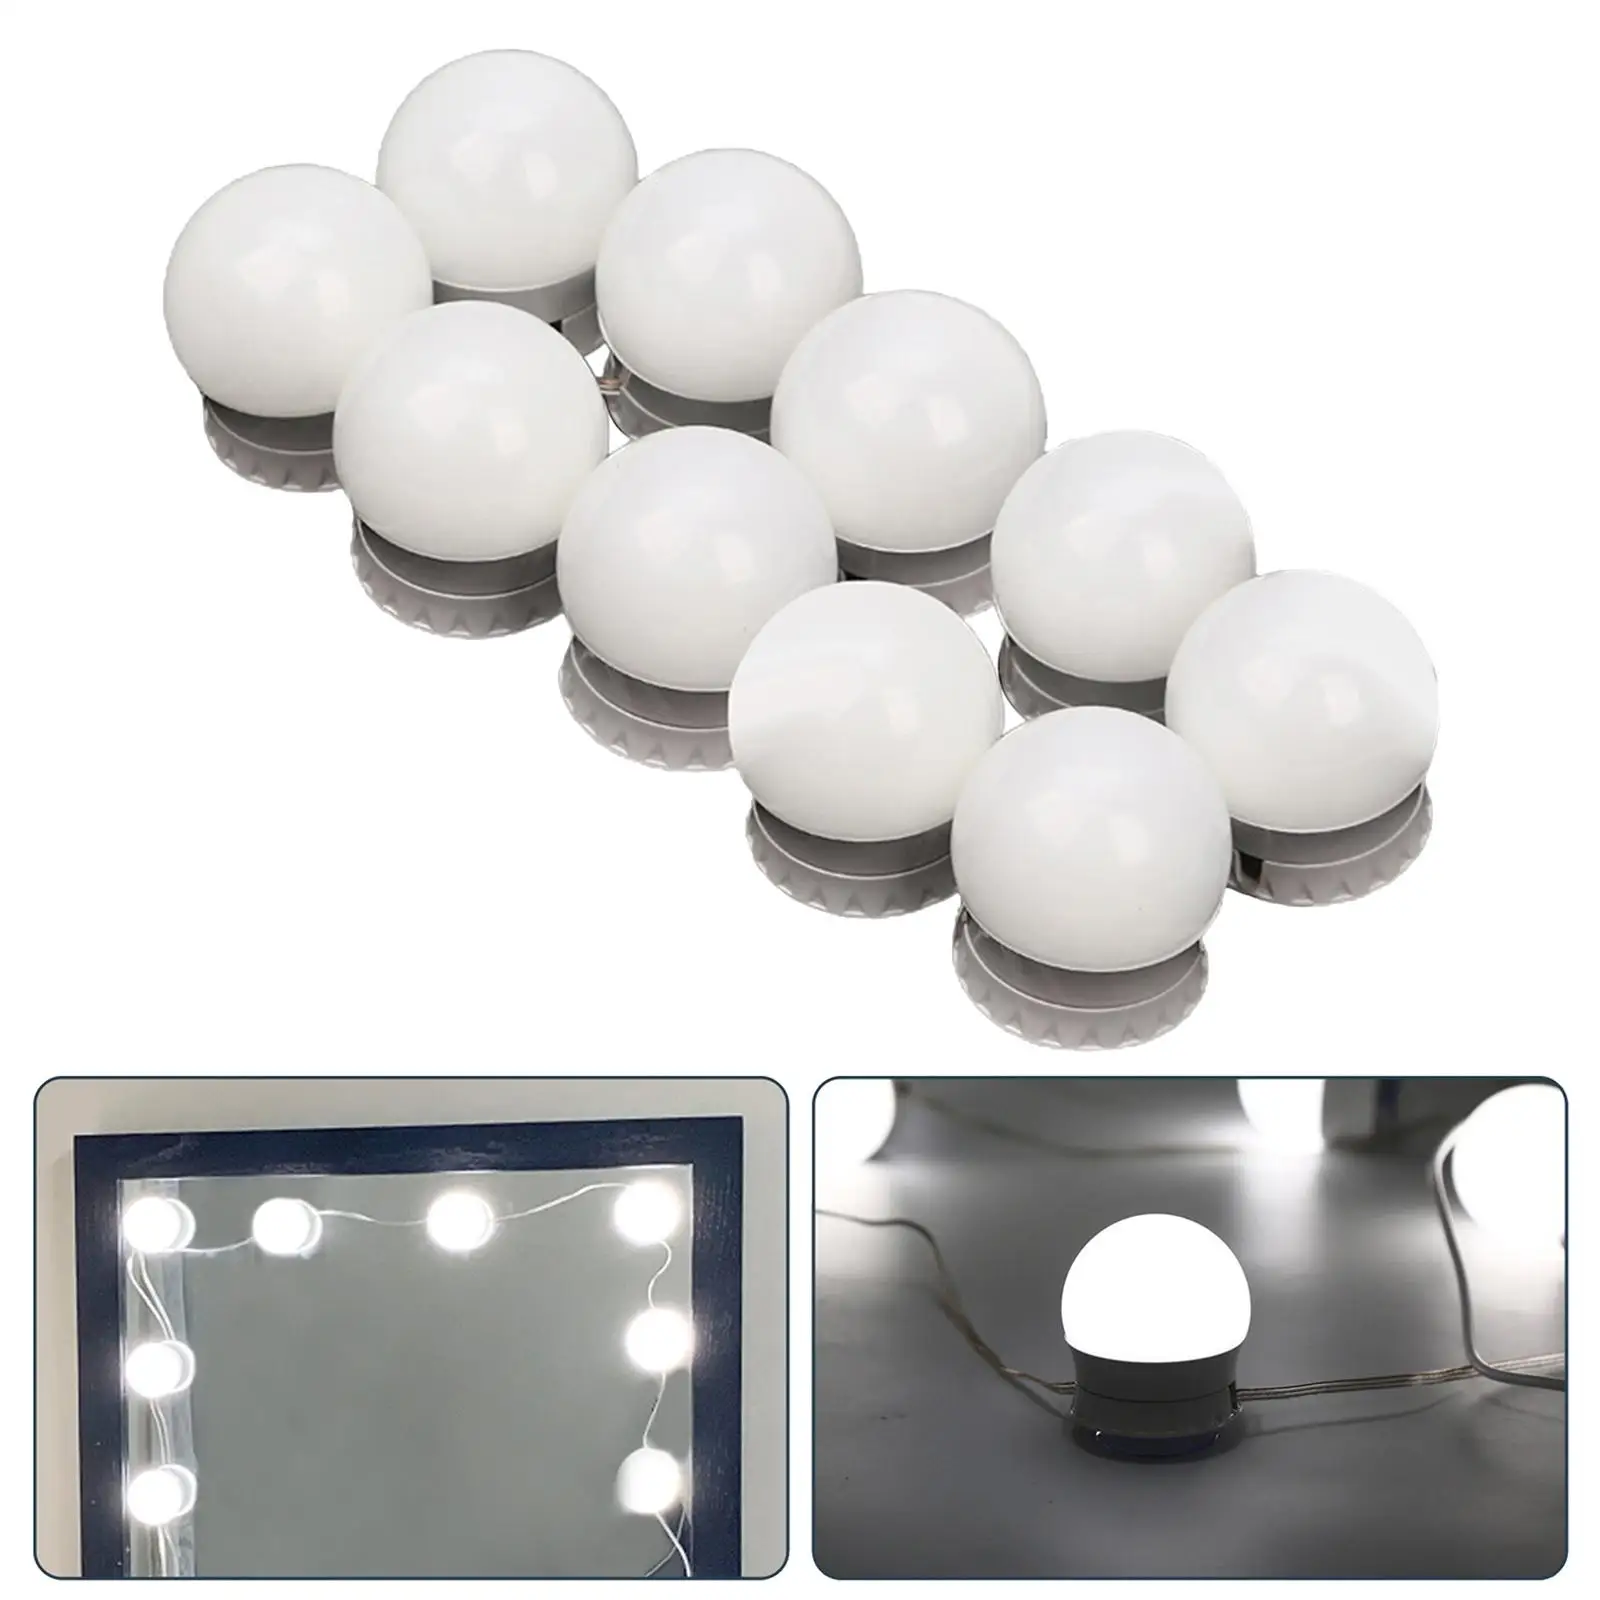 LED Make Up Light 10 Bulb Mirror Lights Wall Lamp for Makeup Dressing Table